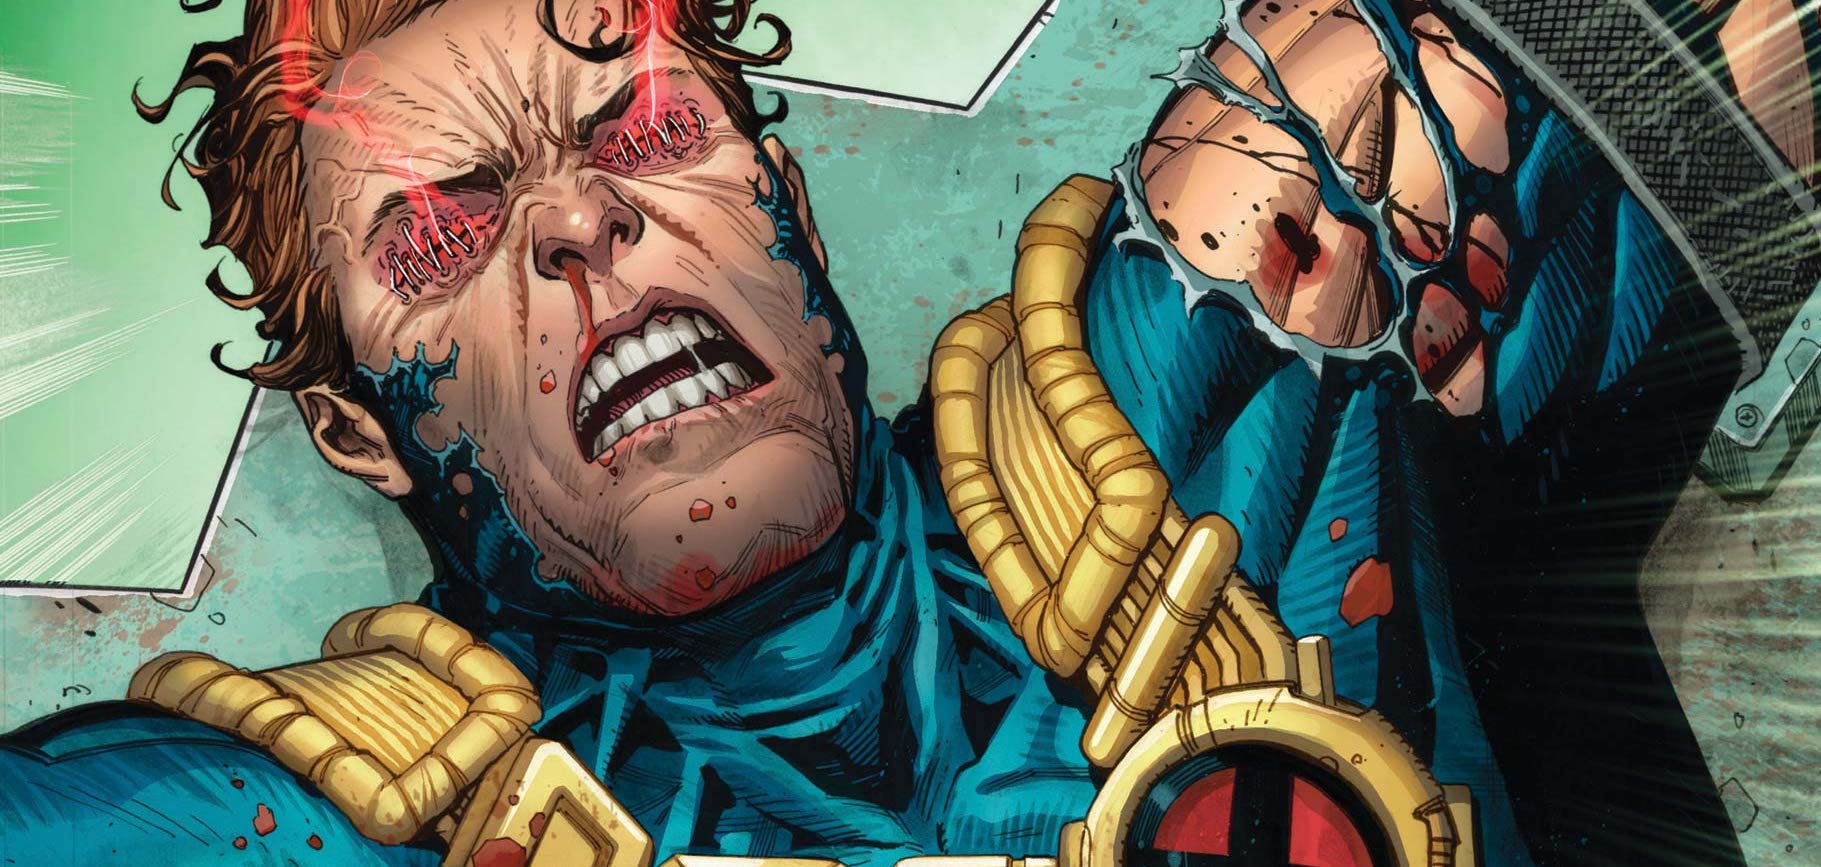 'X-Men' #27 will please Fantastic Four fans